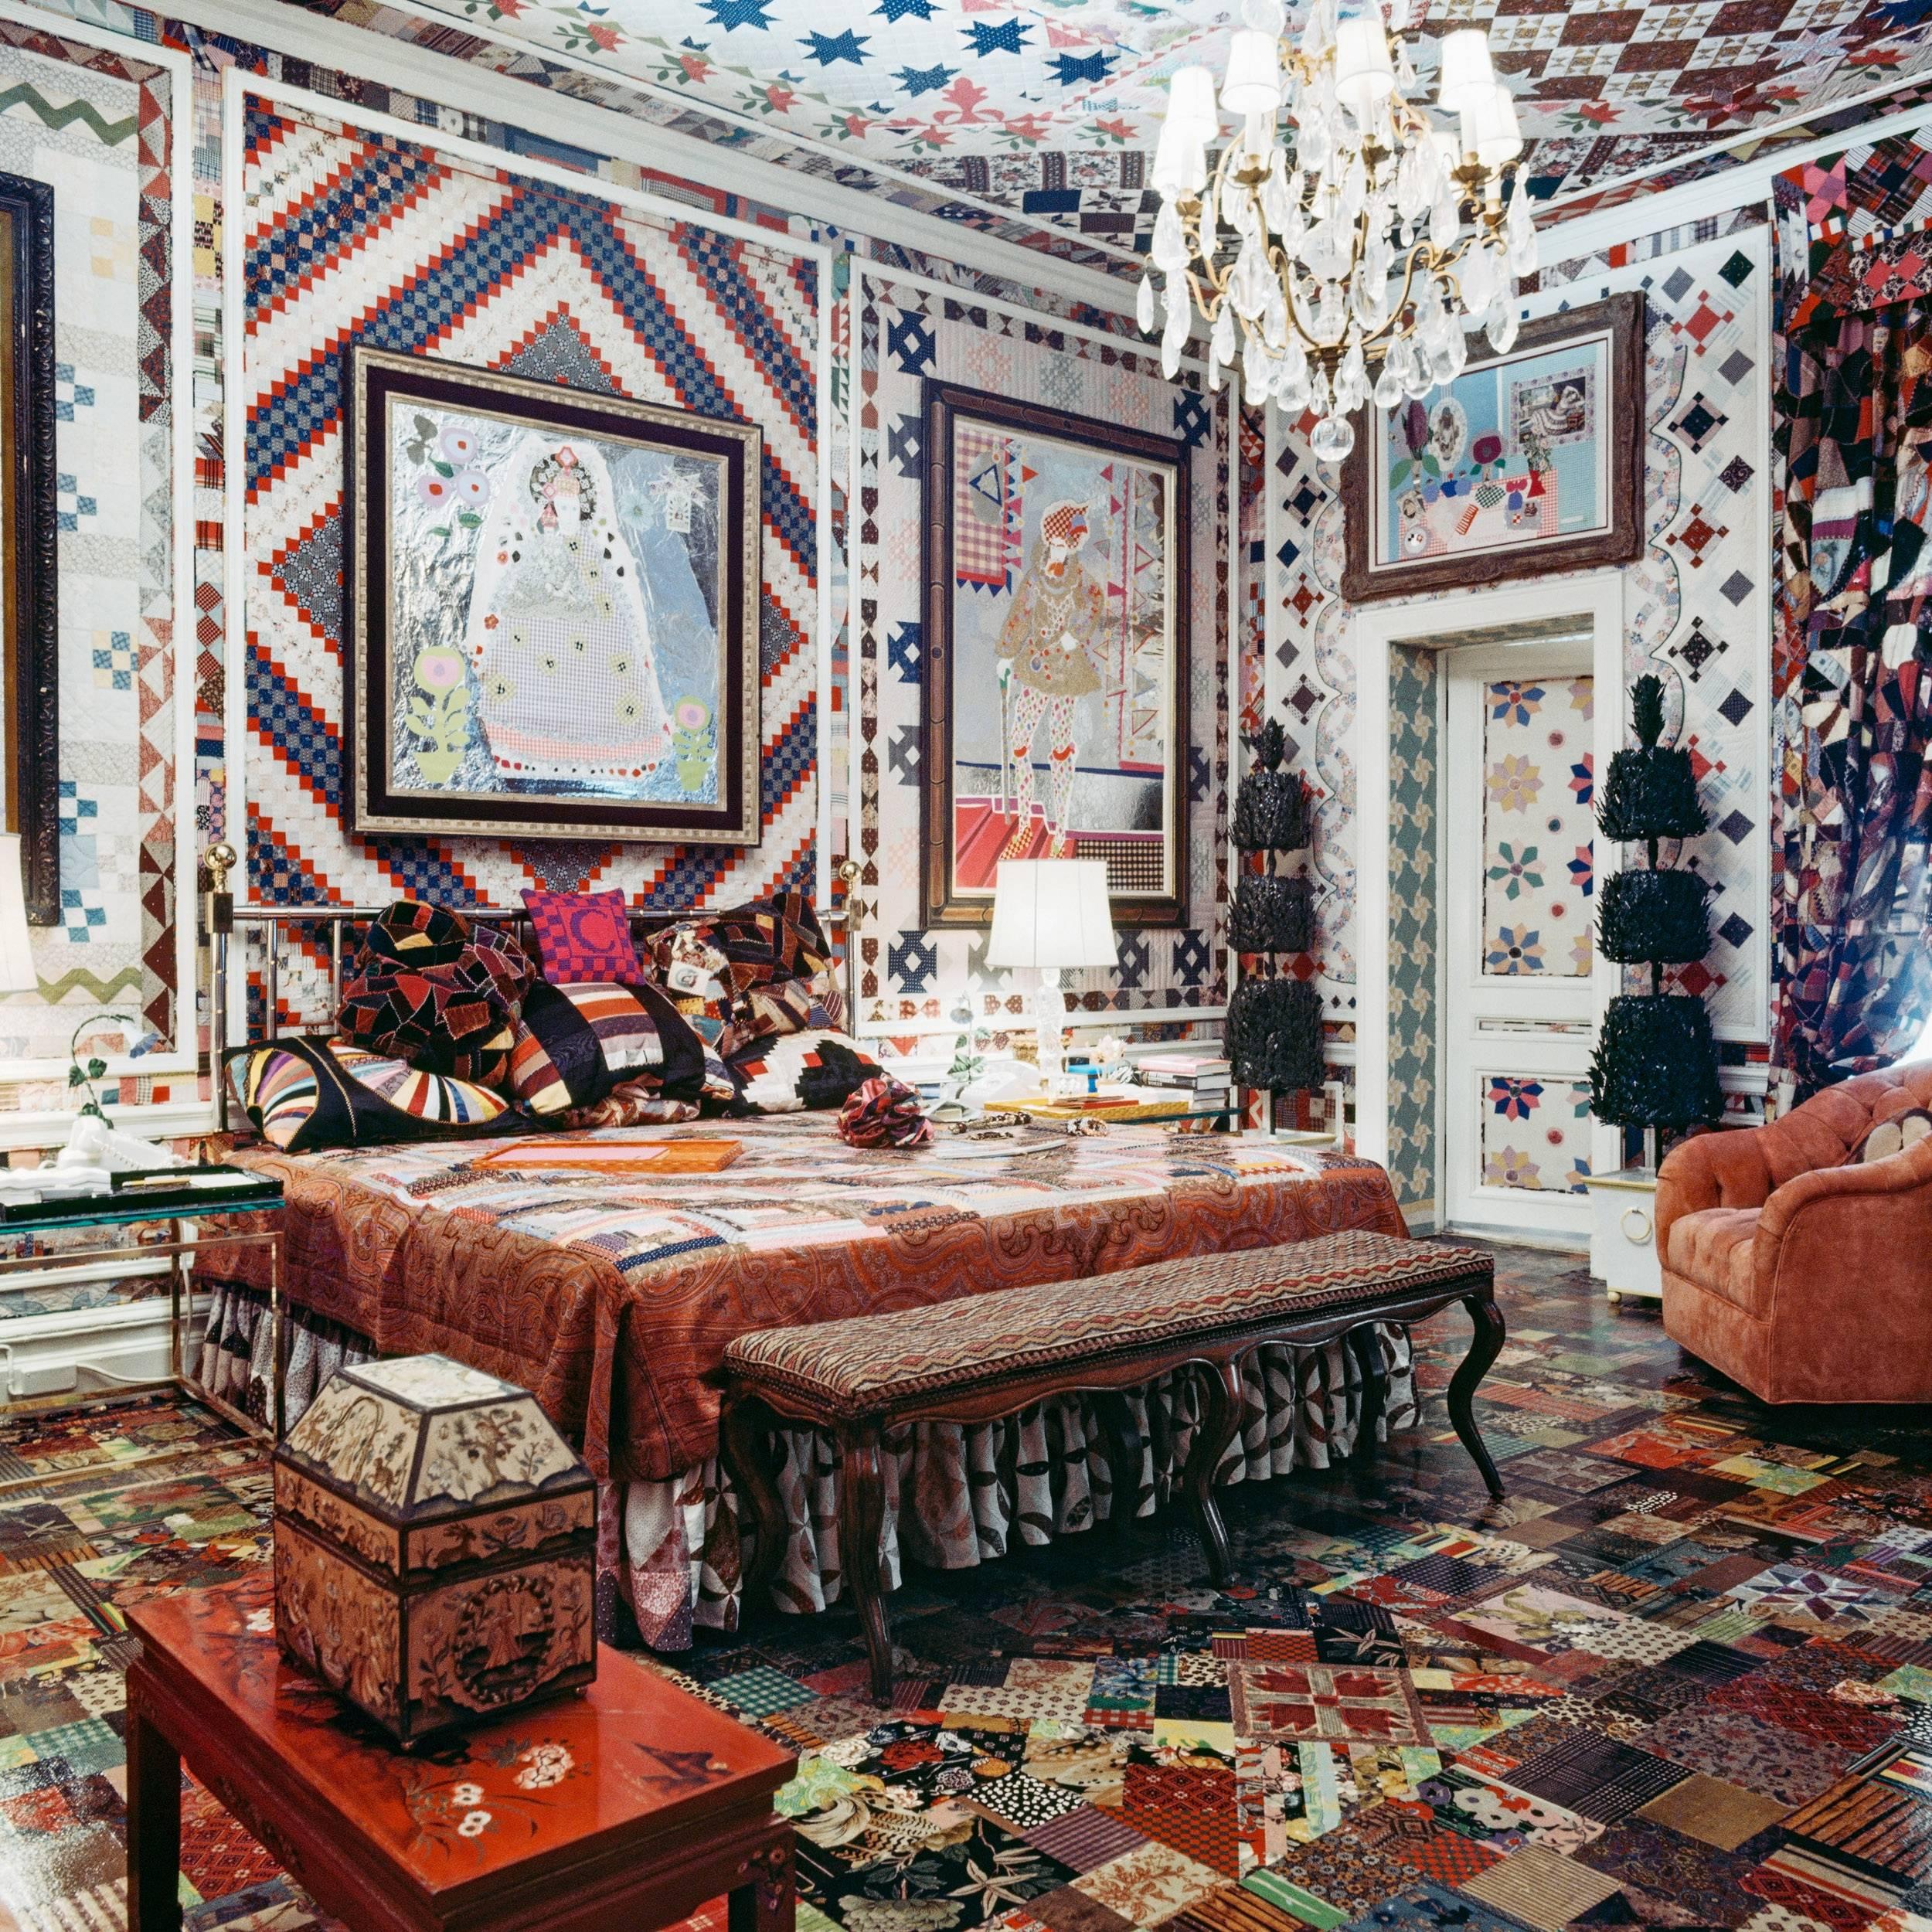 Around That Time - Gloria Vanderbilt Apartment, New York, 1970